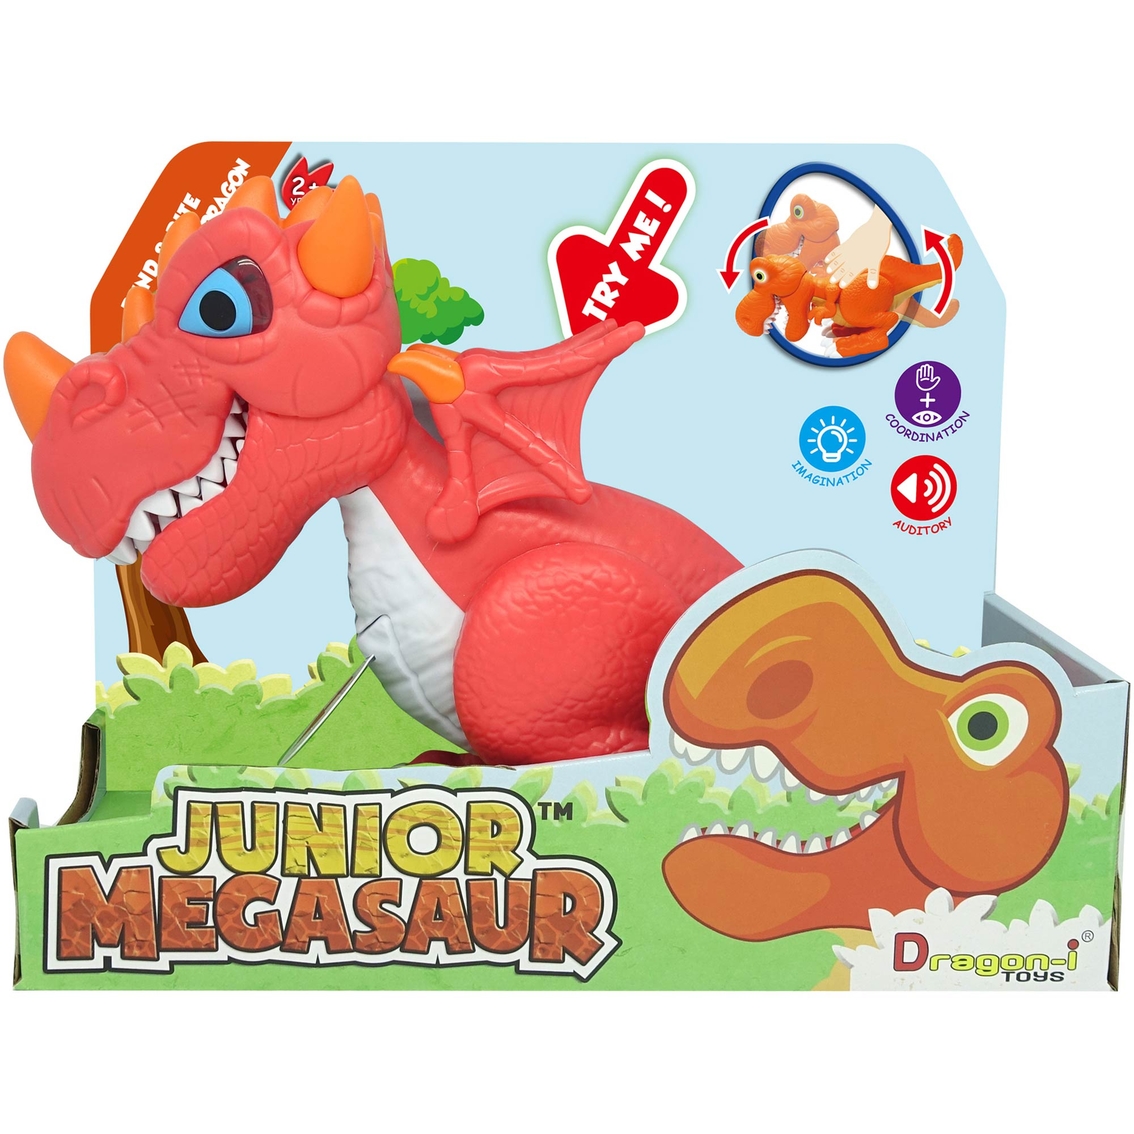 Dragon-I Junior Megasaur Bend and Bite Dino, Red - Image 2 of 3